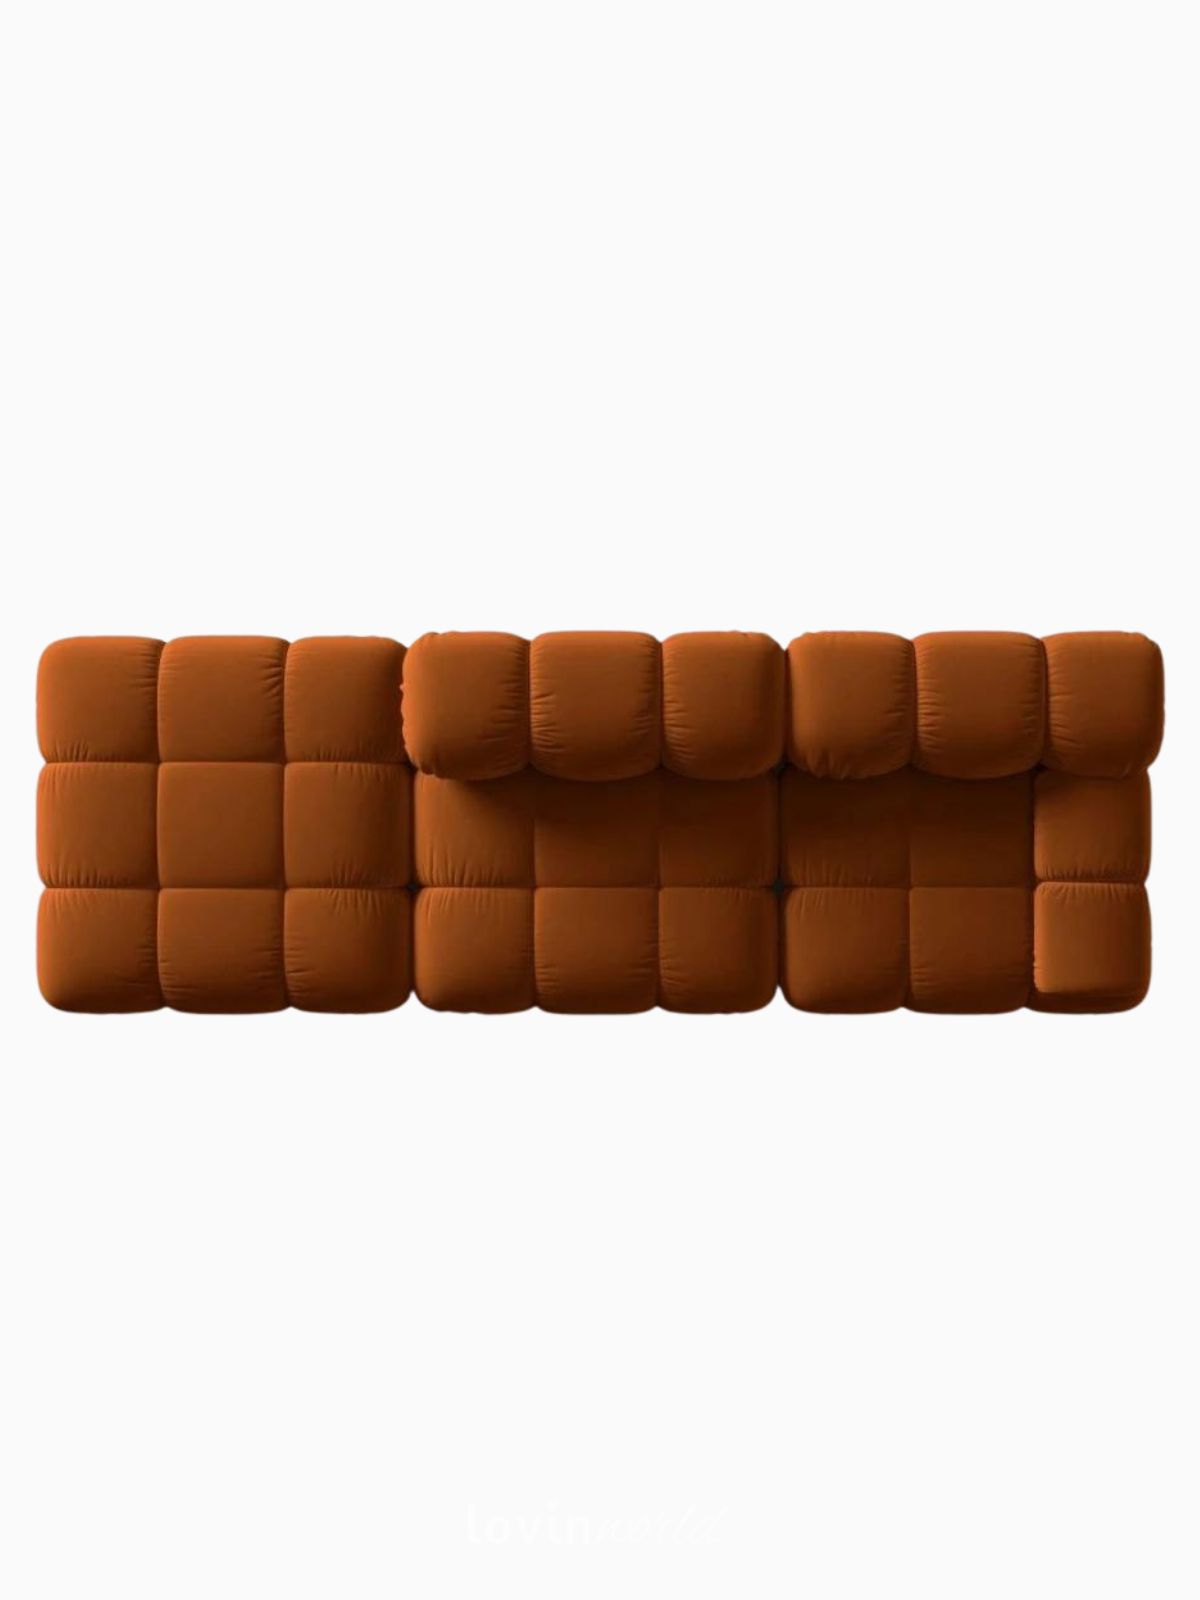 Divano modulare 4 sedute Bellis in velluto, colore arancione-4